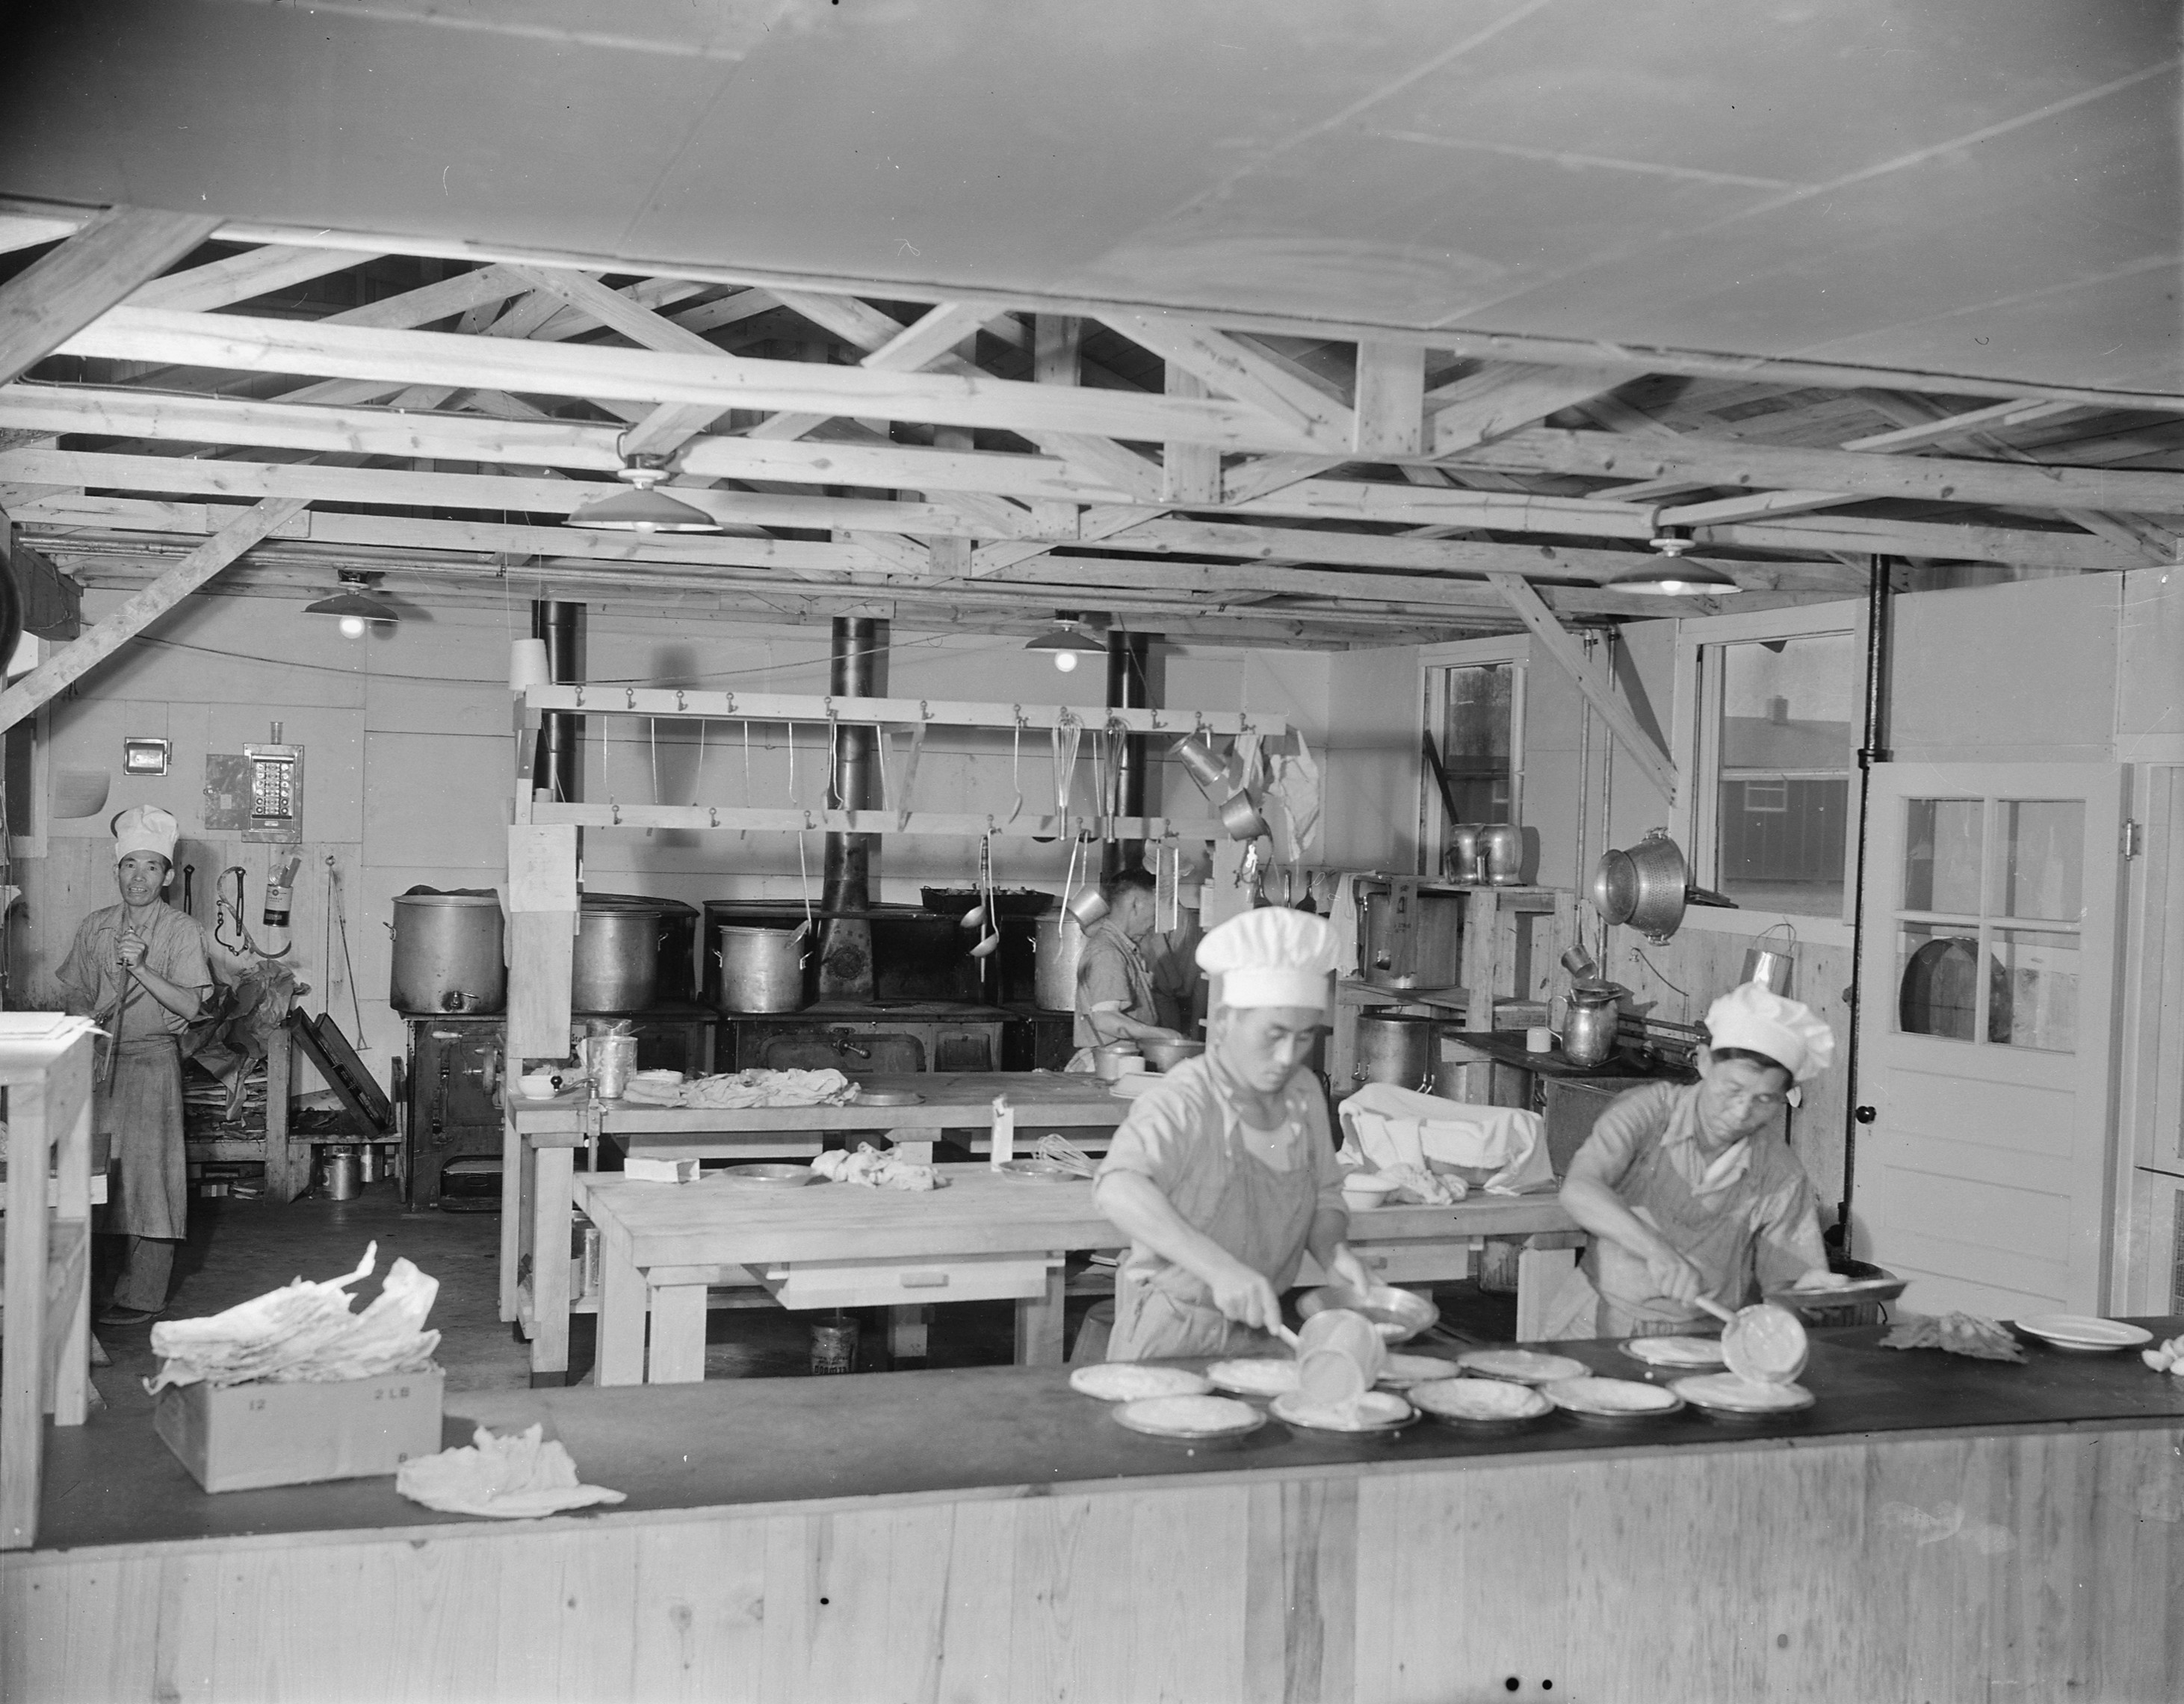 Staff members of Block 7 kitchen at work, Jerome War Relocation Center, Arkansas, United States, 18 Nov 1942